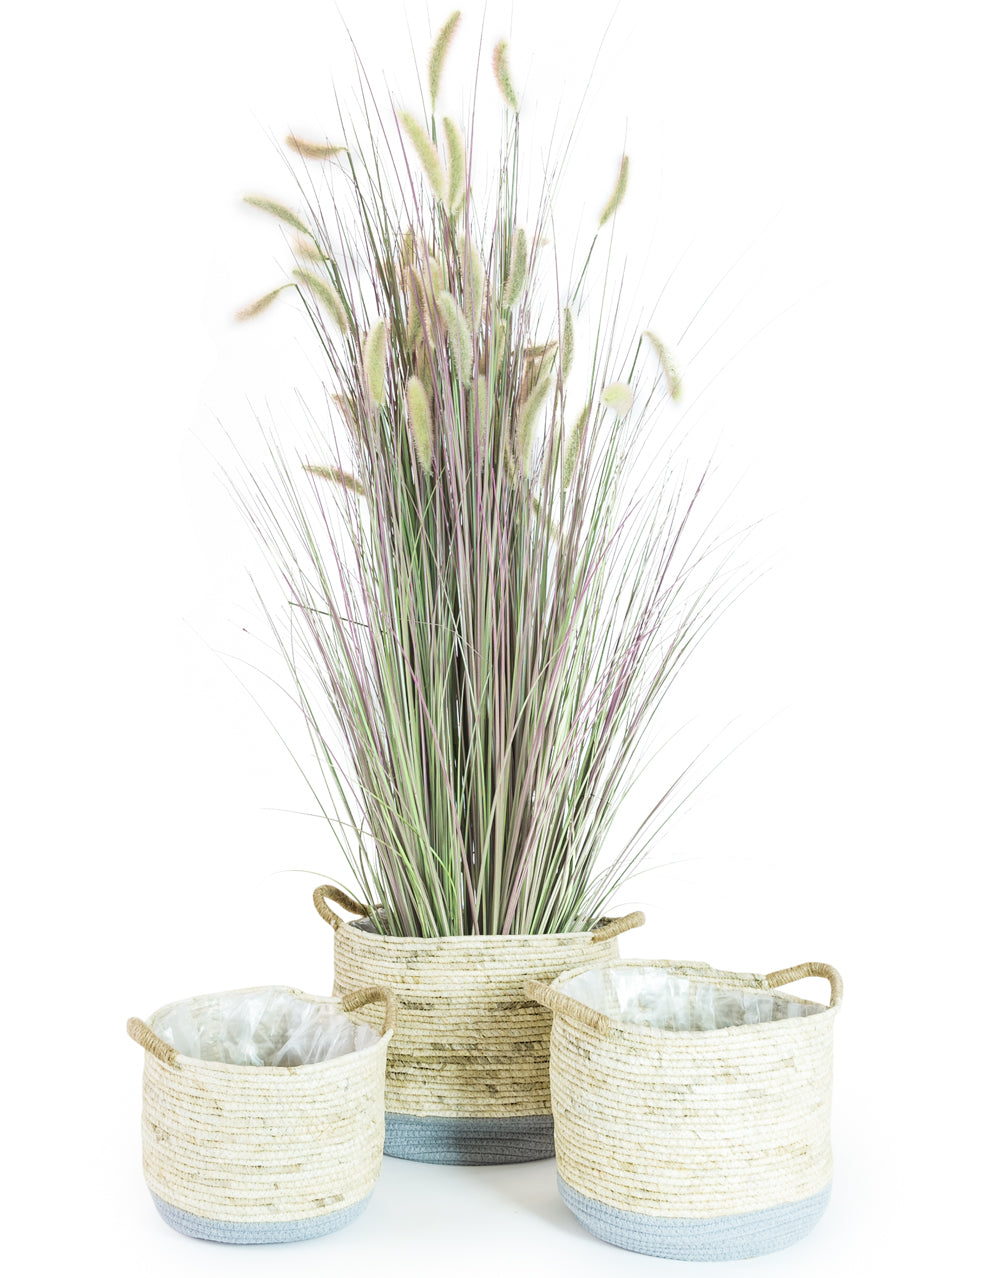 Wicker and Grey Plant Basket - 3 sizes